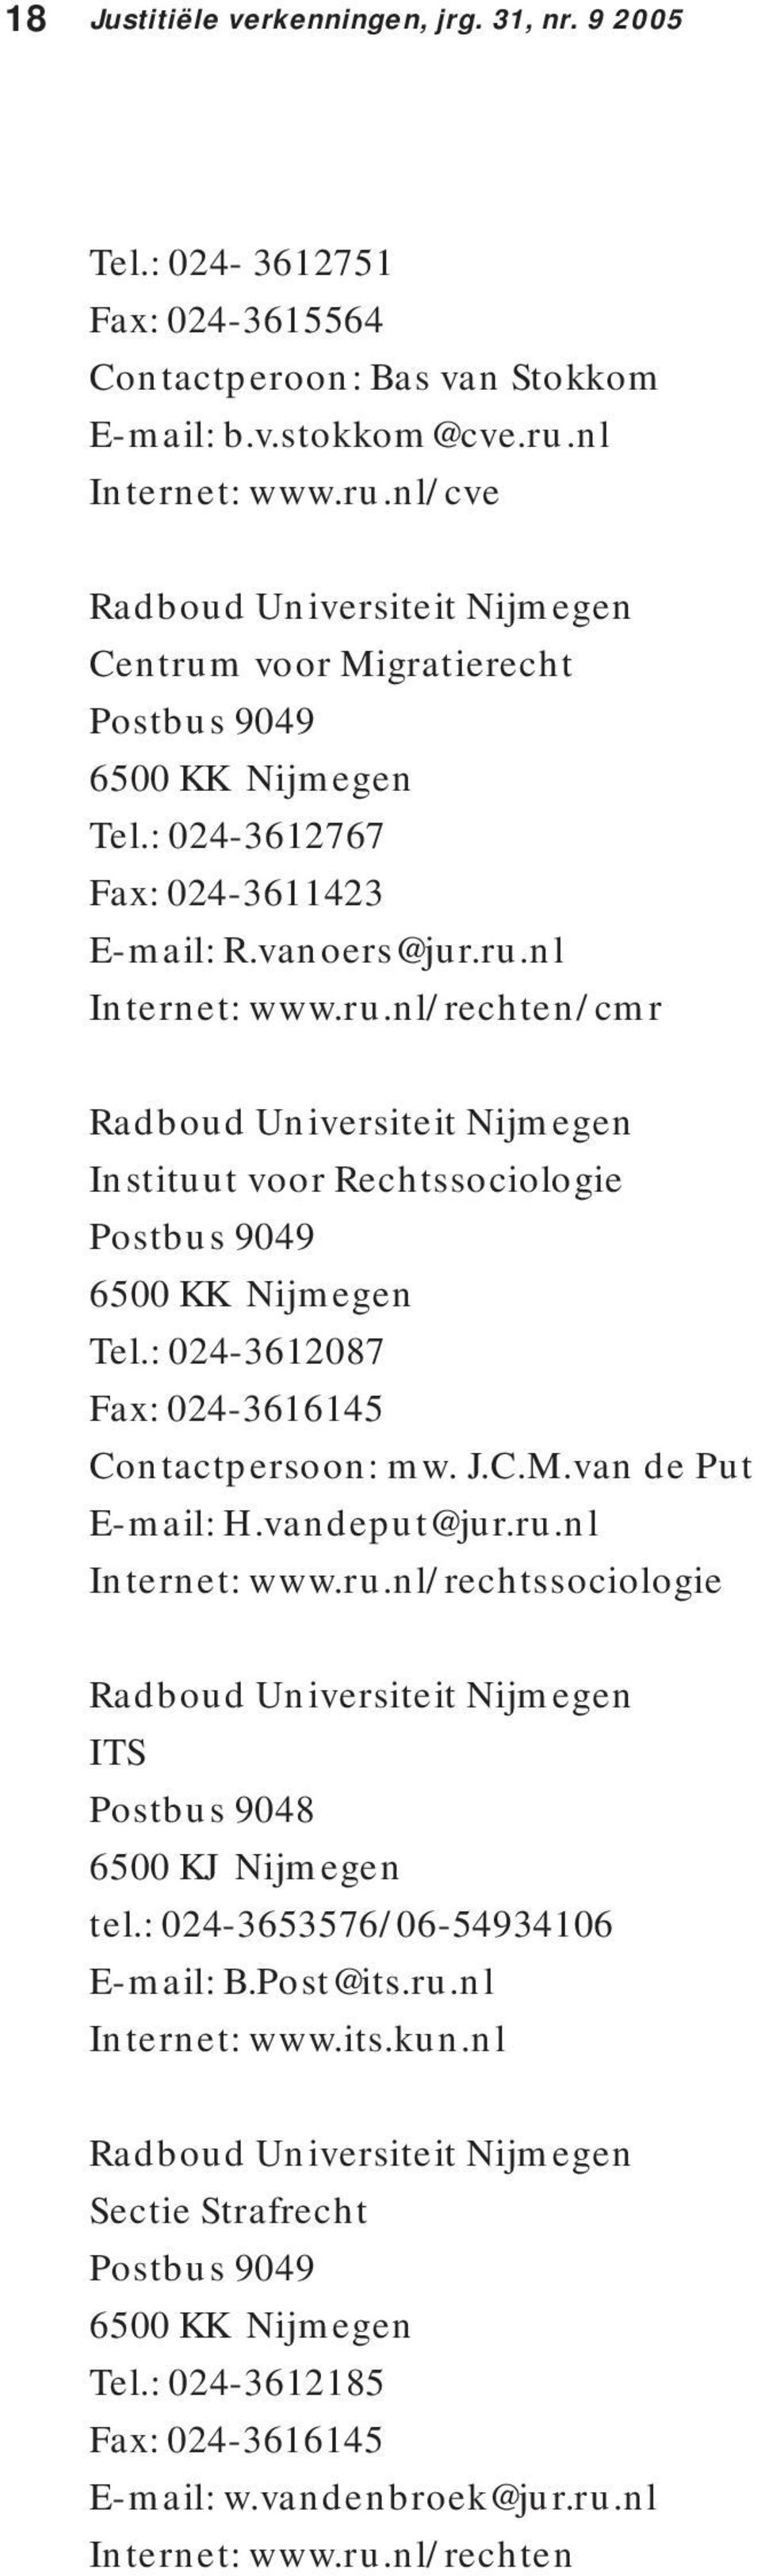 : 024-3612087 Fax: 024-3616145 Contactpersoon: mw. J.C.M.van de Put E-mail: H.vandeput@jur.ru.nl Internet: www.ru.nl/rechtssociologie Radboud Universiteit Nijmegen ITS Postbus 9048 6500 KJ Nijmegen tel.